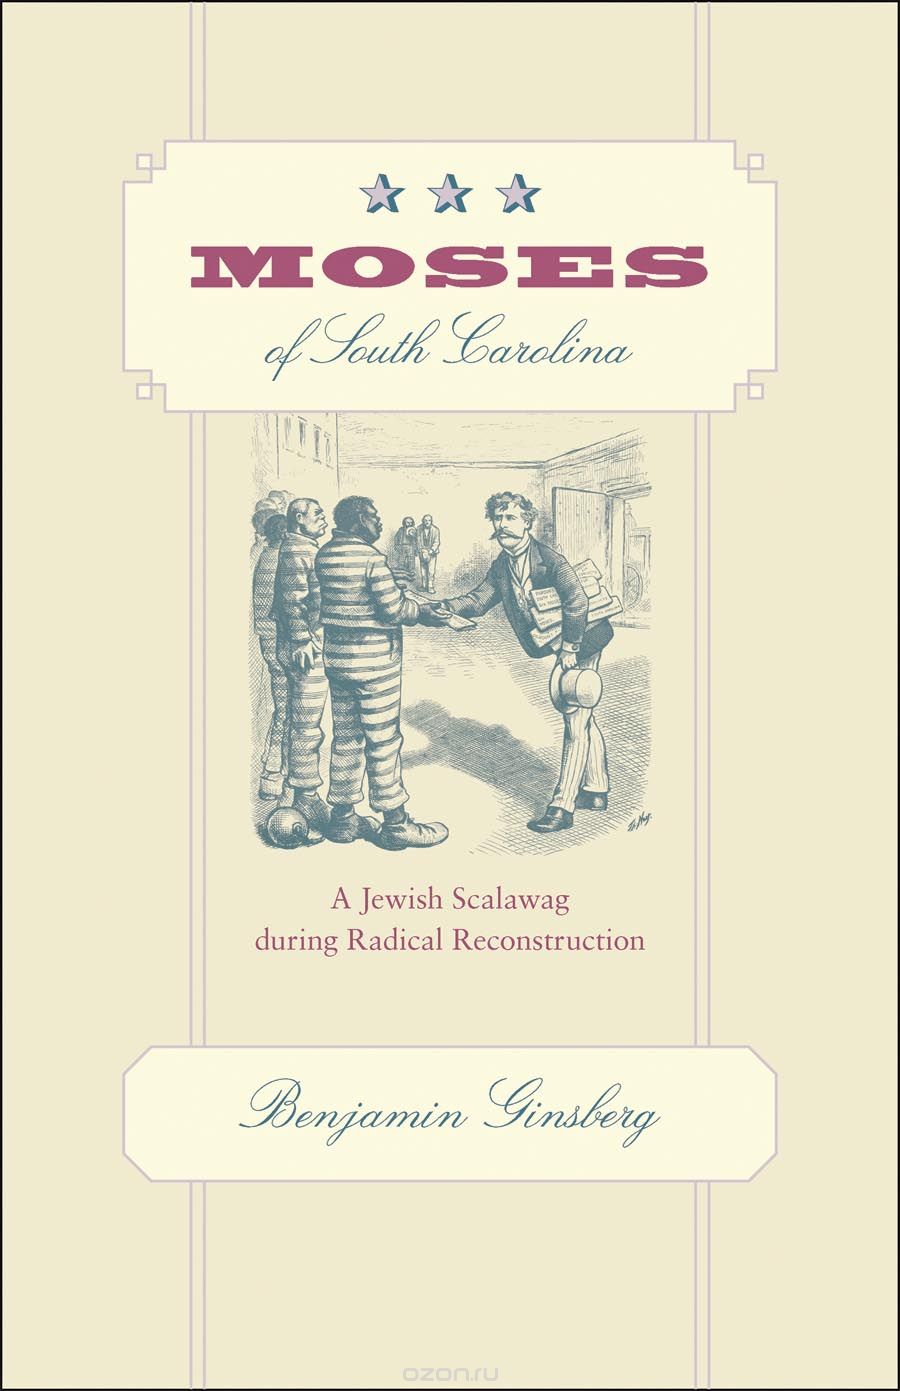 Moses of South Carolina – A Jewish Scalawag during Radical Reconstruction